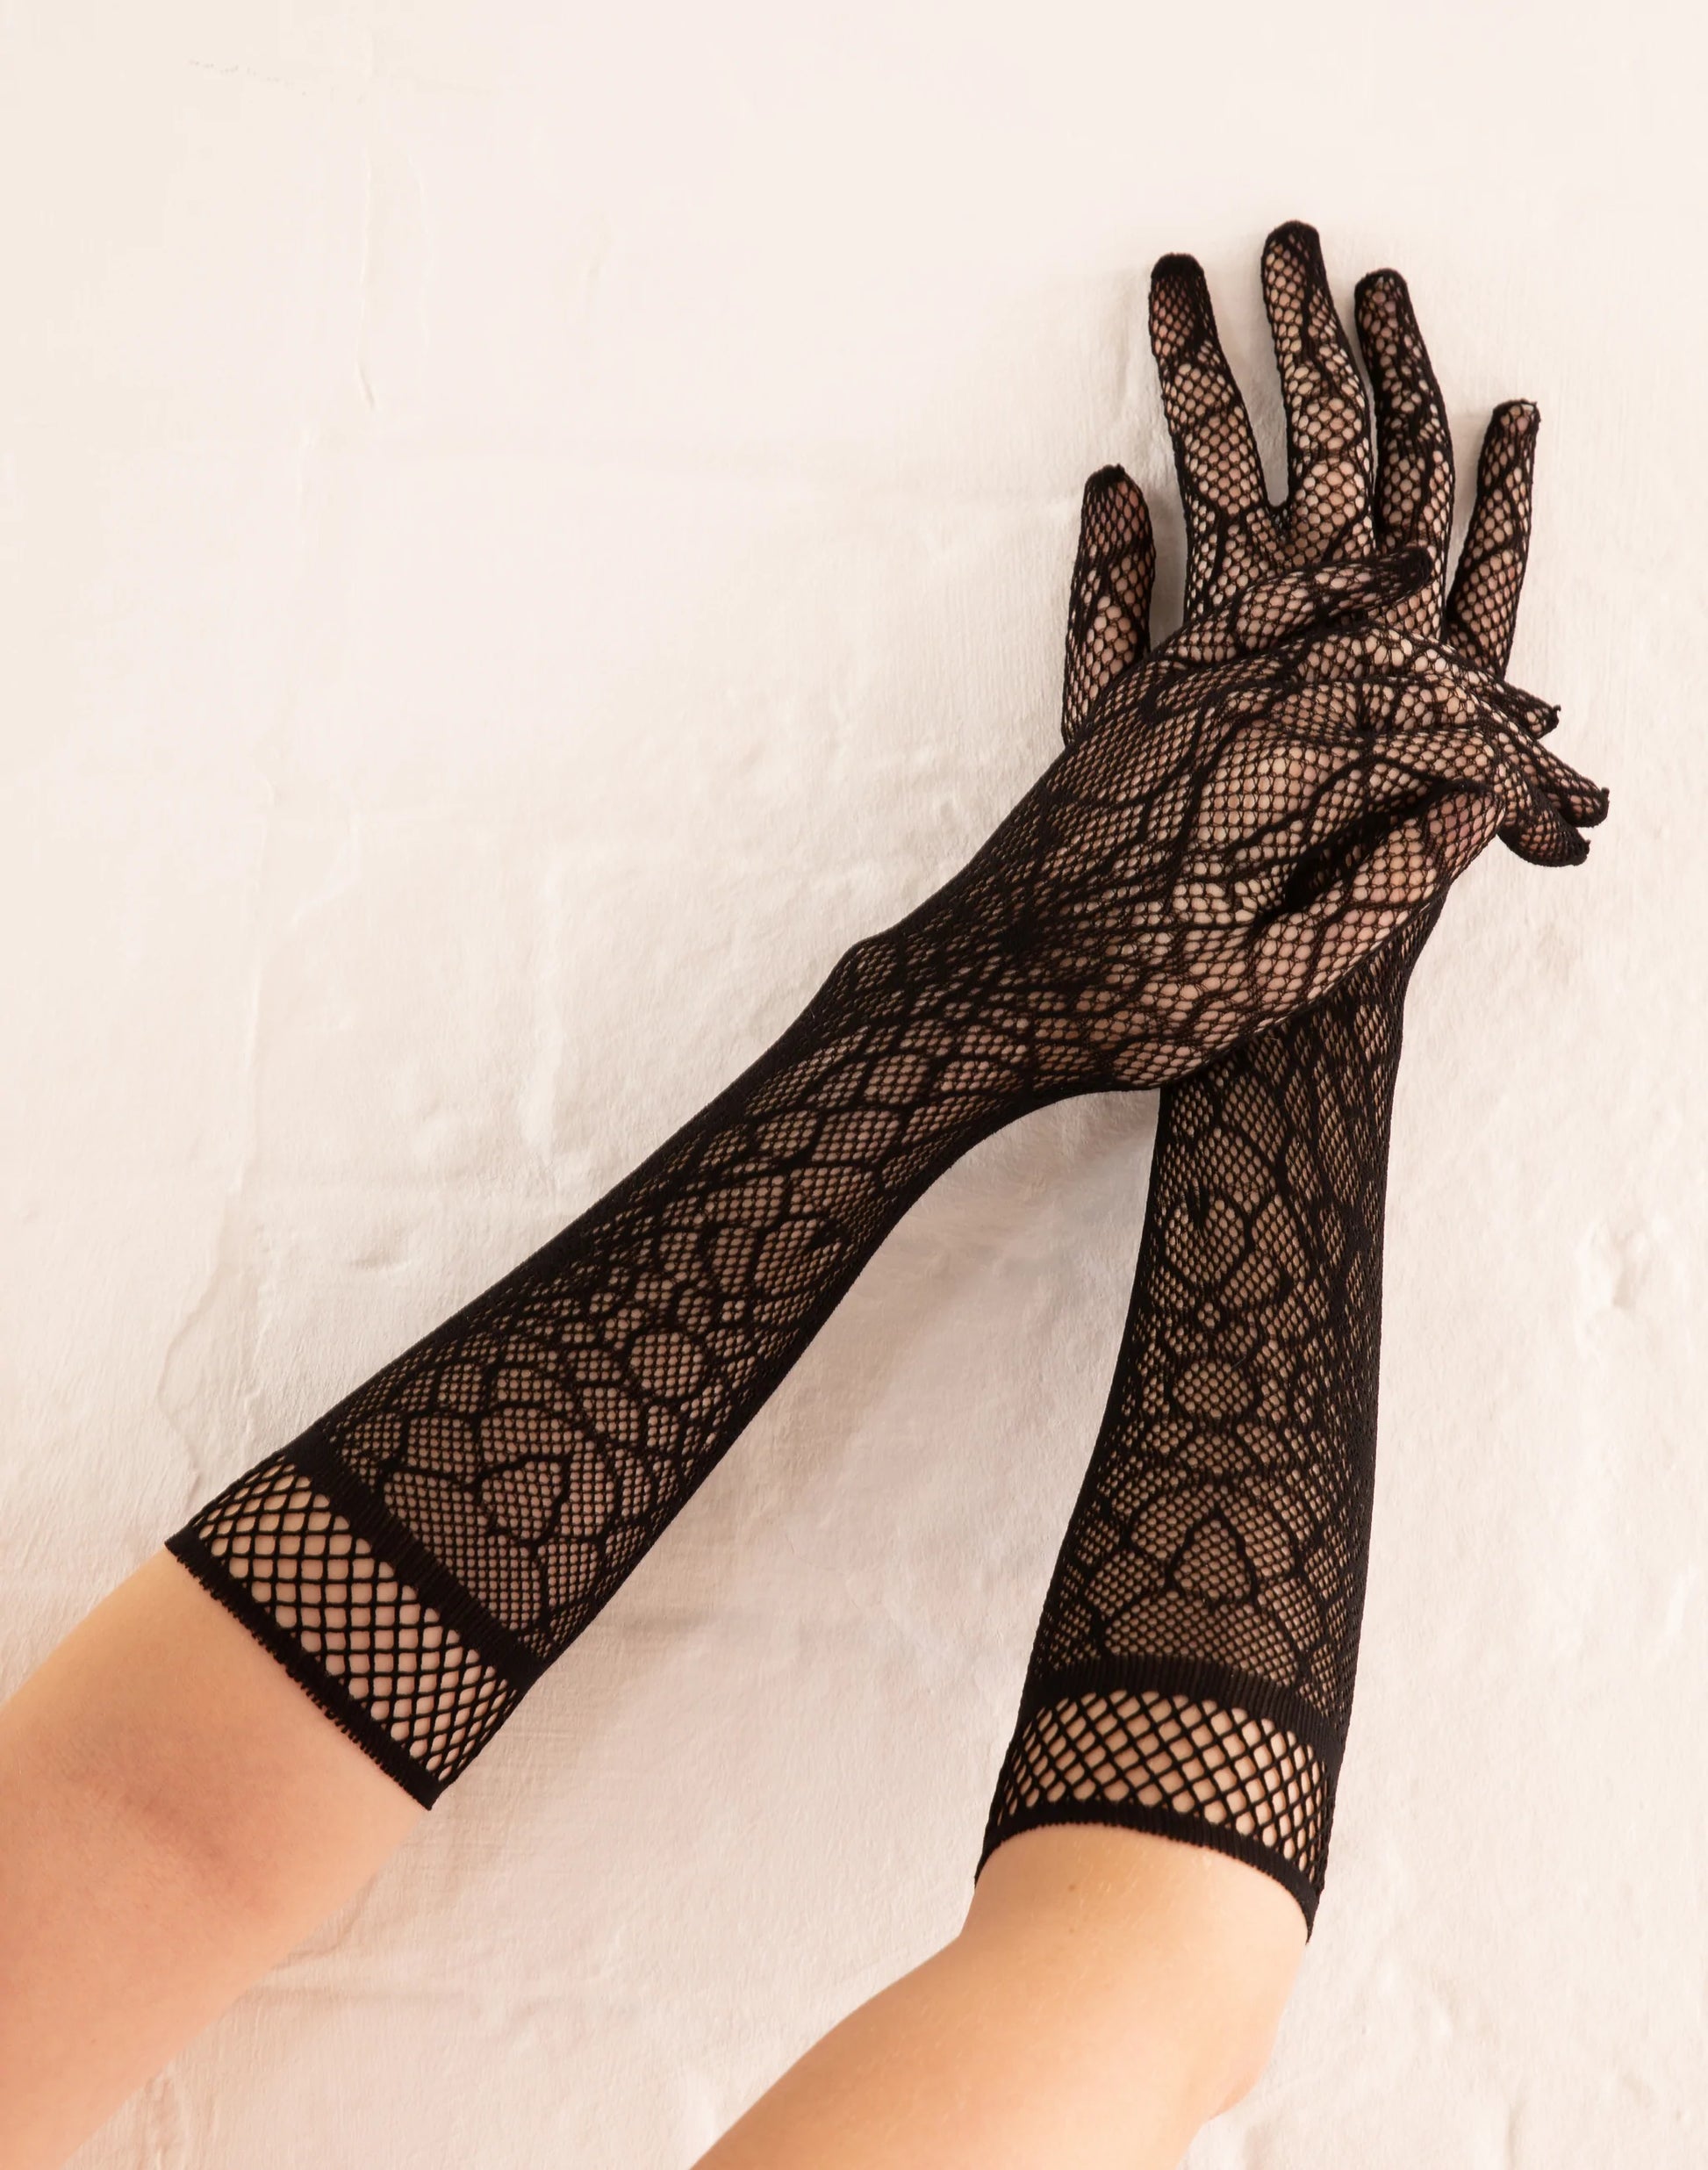 Pamela Mann Cobweb Net Gloves - Black openwork crochet fishnet gloves with an all over woven spider web style pattern and plain fishnet cuff.